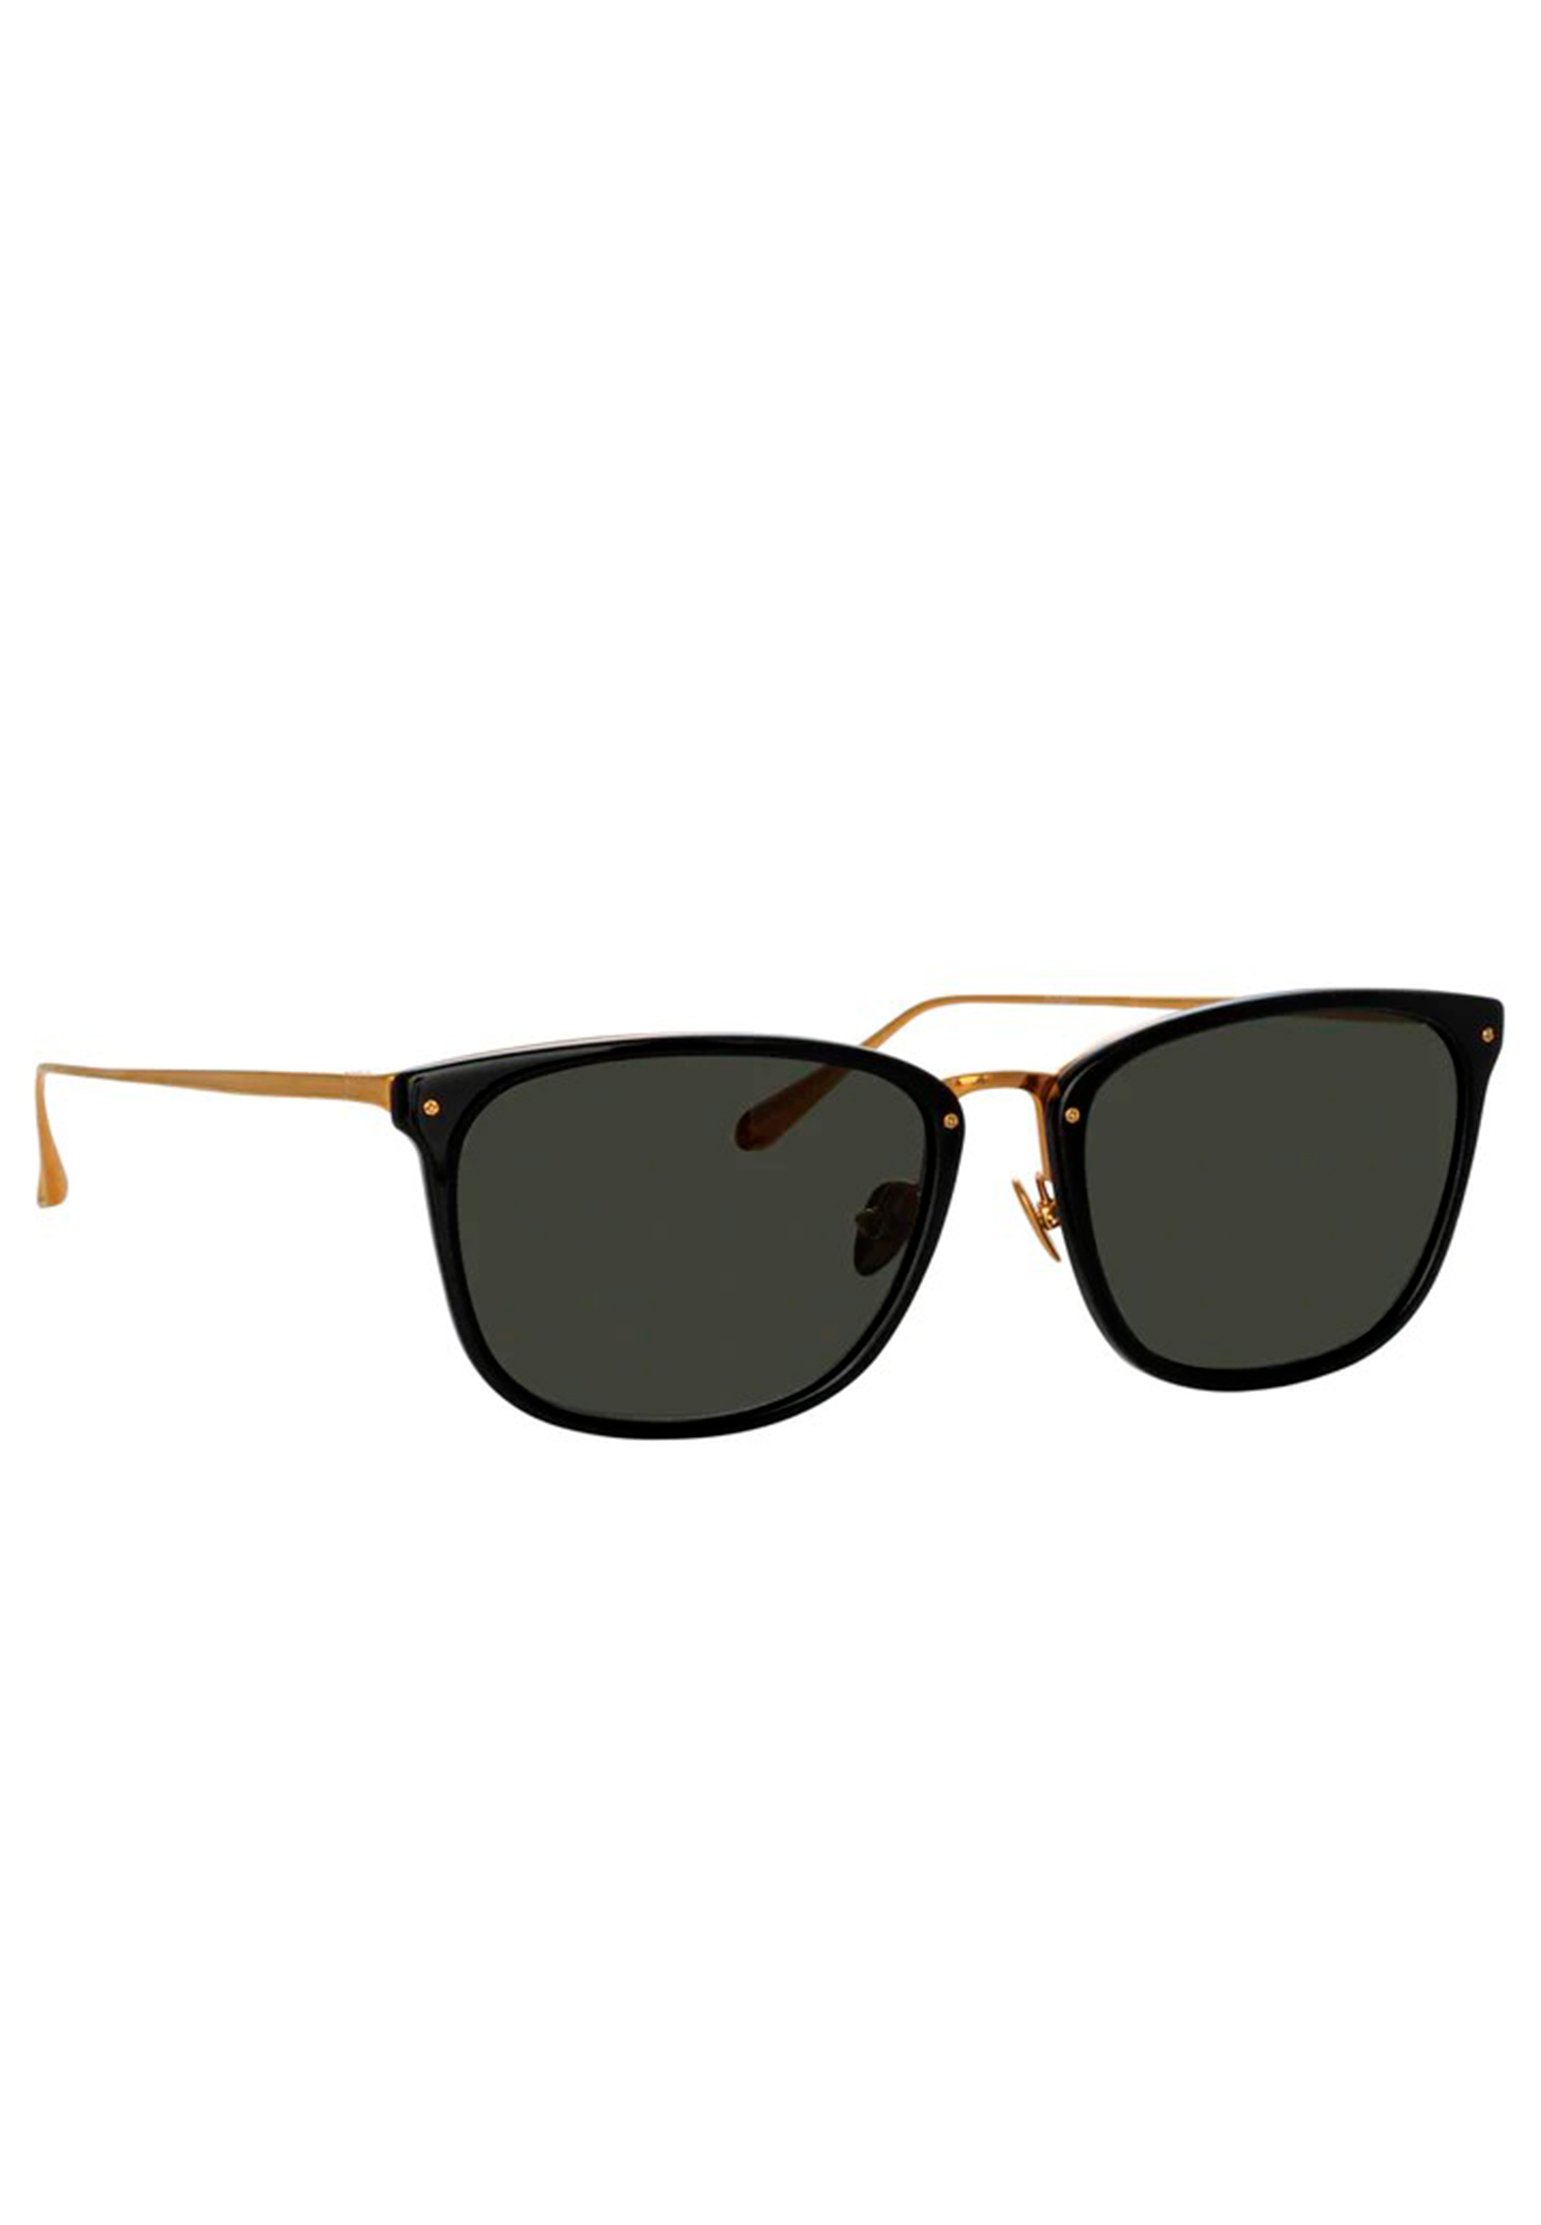 Sunglasses LINDA FARROW Color: black (Code: 4018) in online store Allure